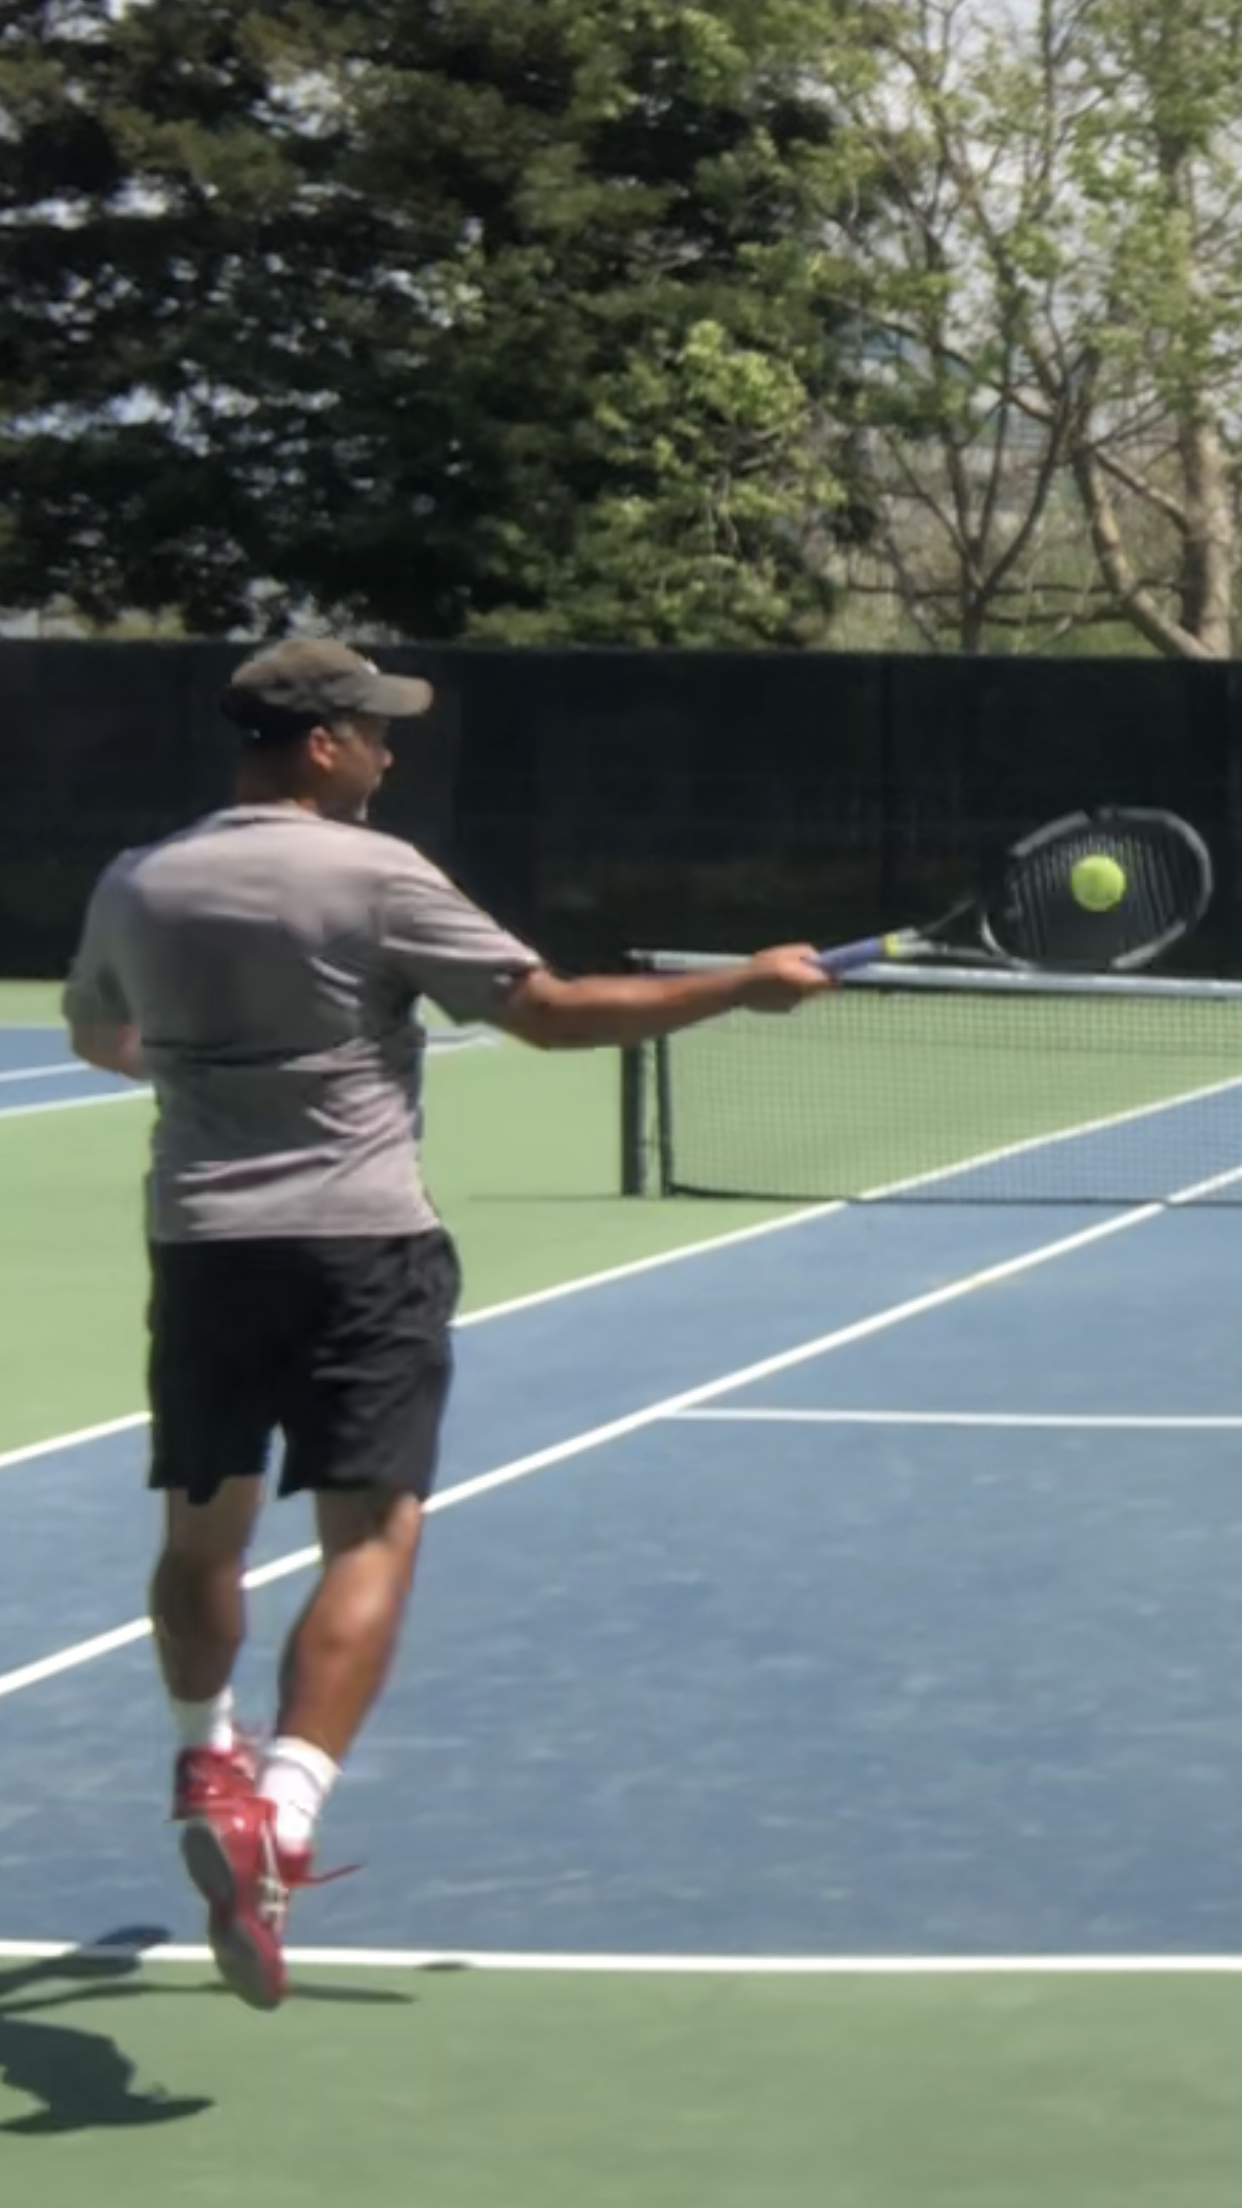 Preston W. teaches tennis lessons in Belmont, CA